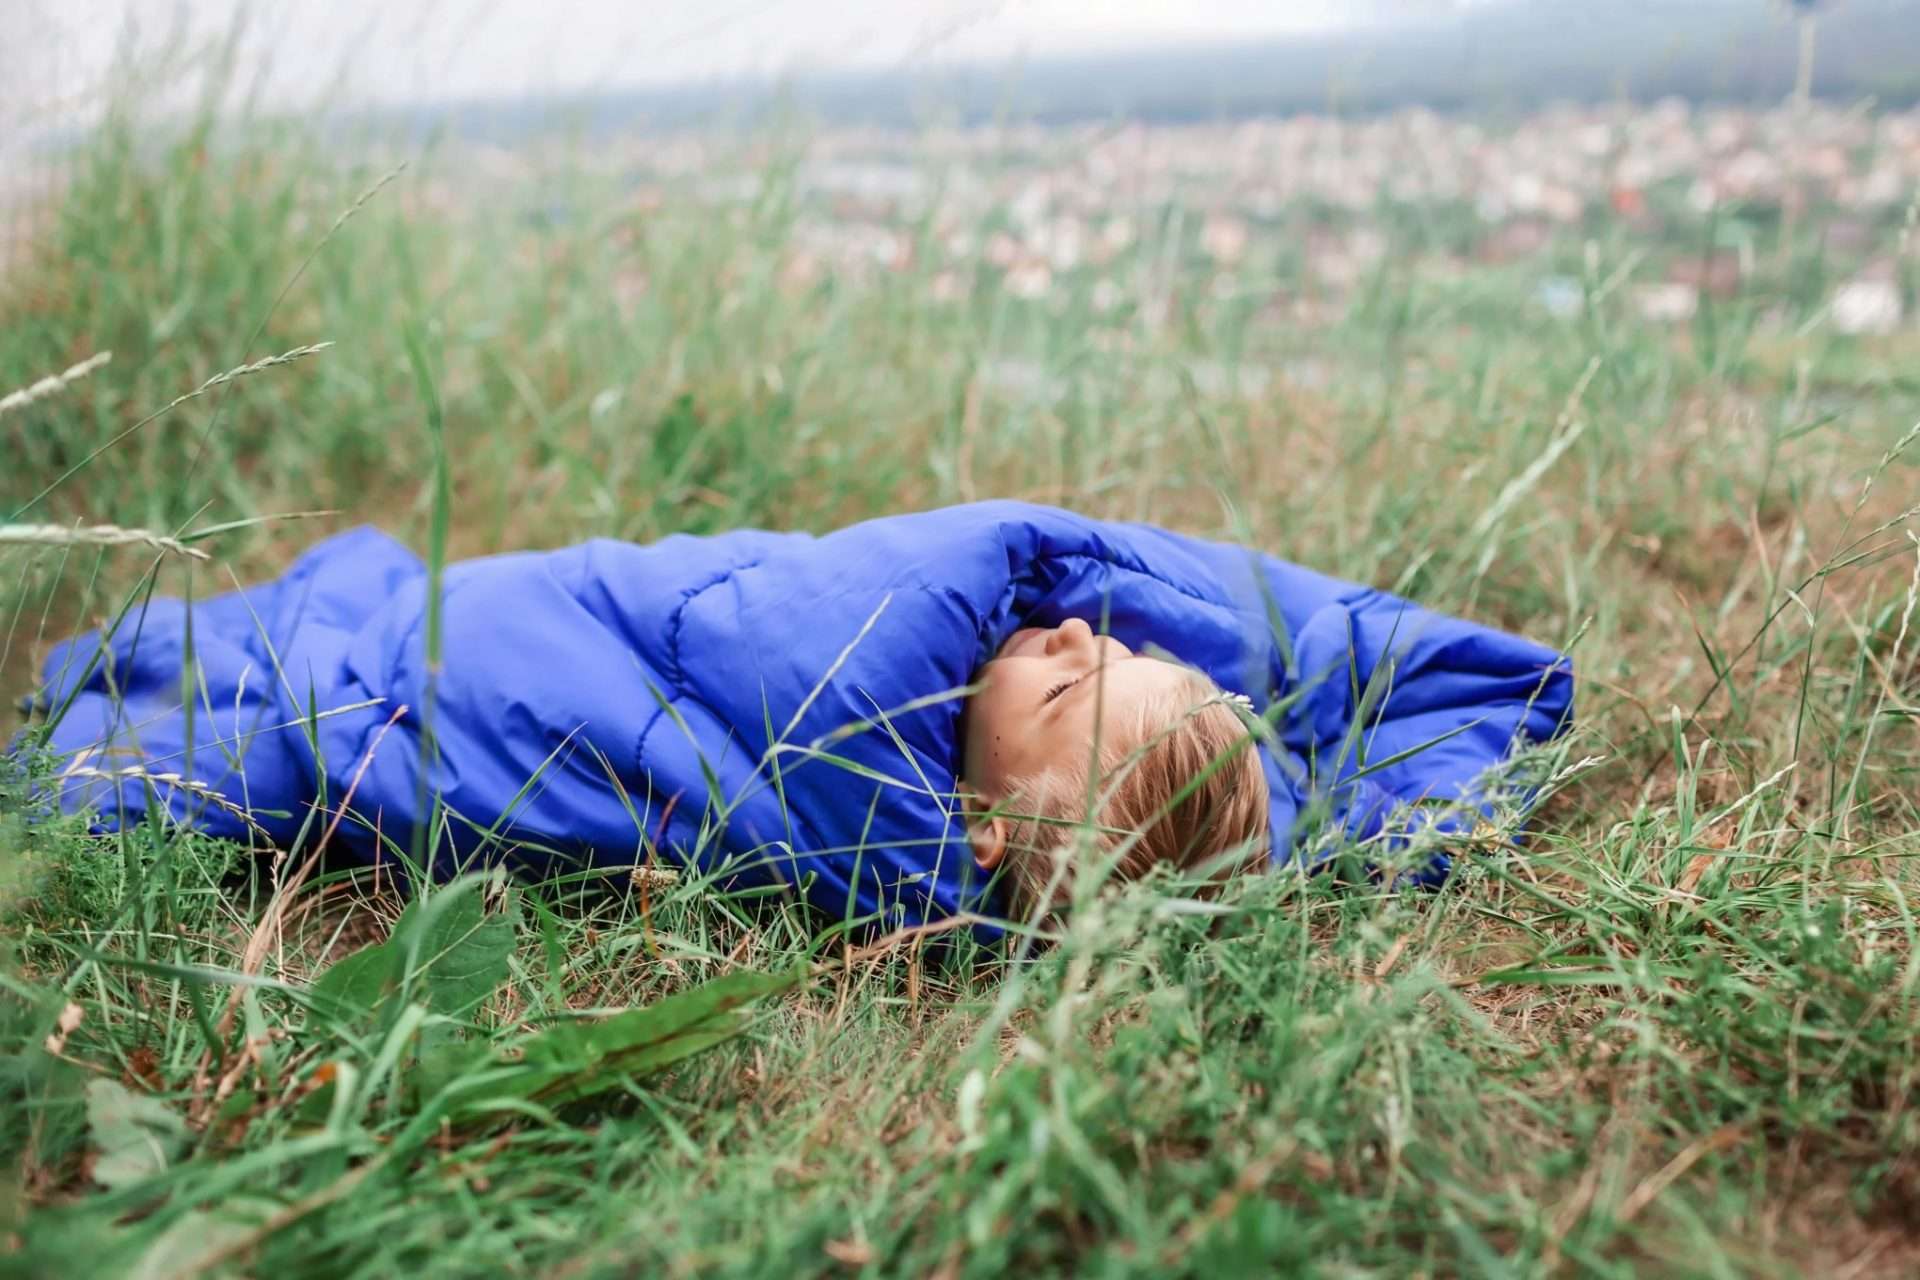 Boy sleeping in sleeping bag in big grass field while cowboy camping